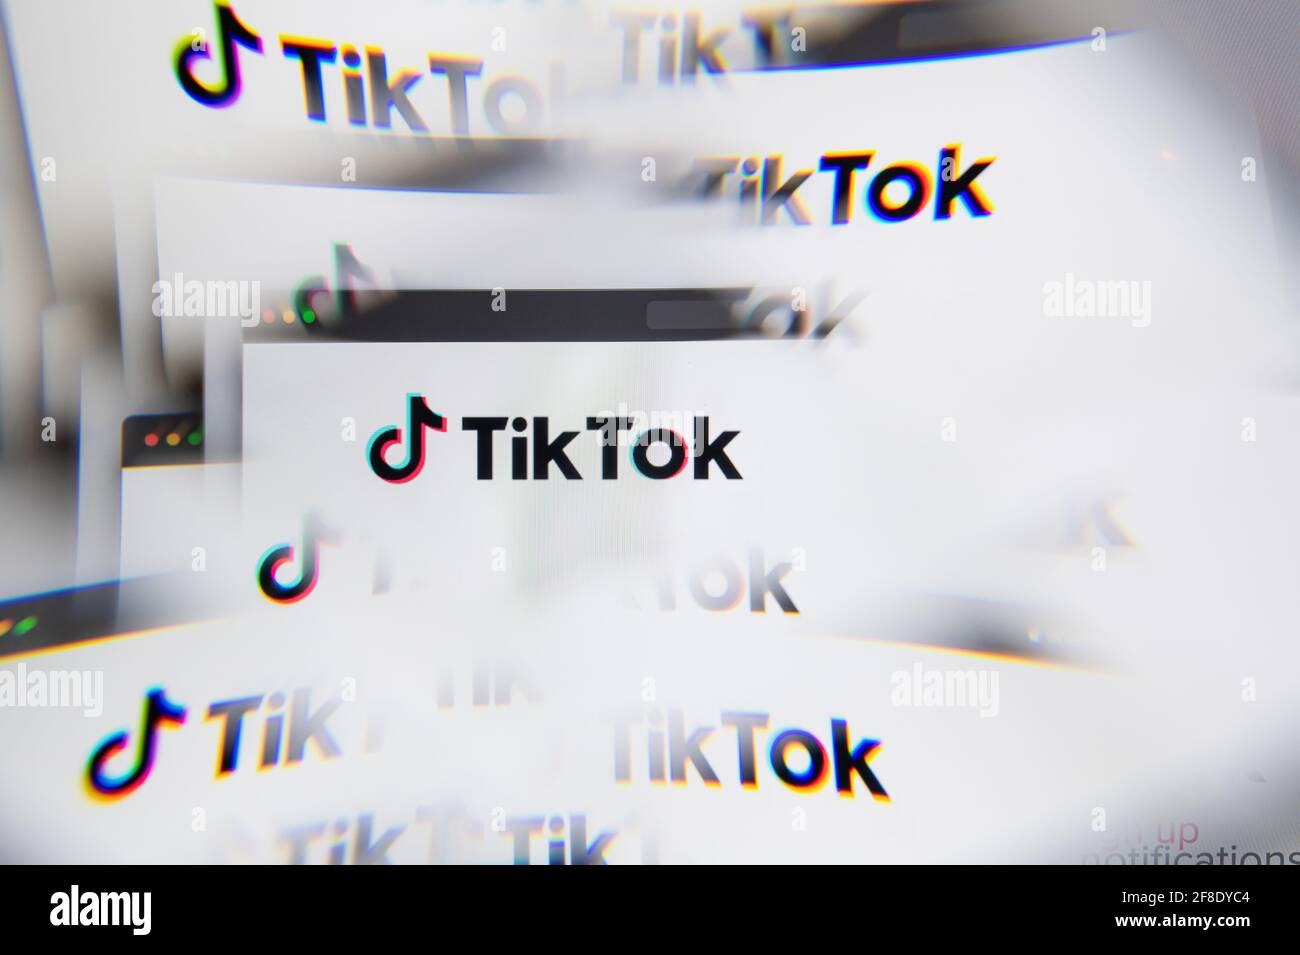 Milan, Italy - APRIL 10, 2021: TikTok logo on laptop screen seen through an optical prism. Illustrative editorial image from TikTok website. Stock Photo